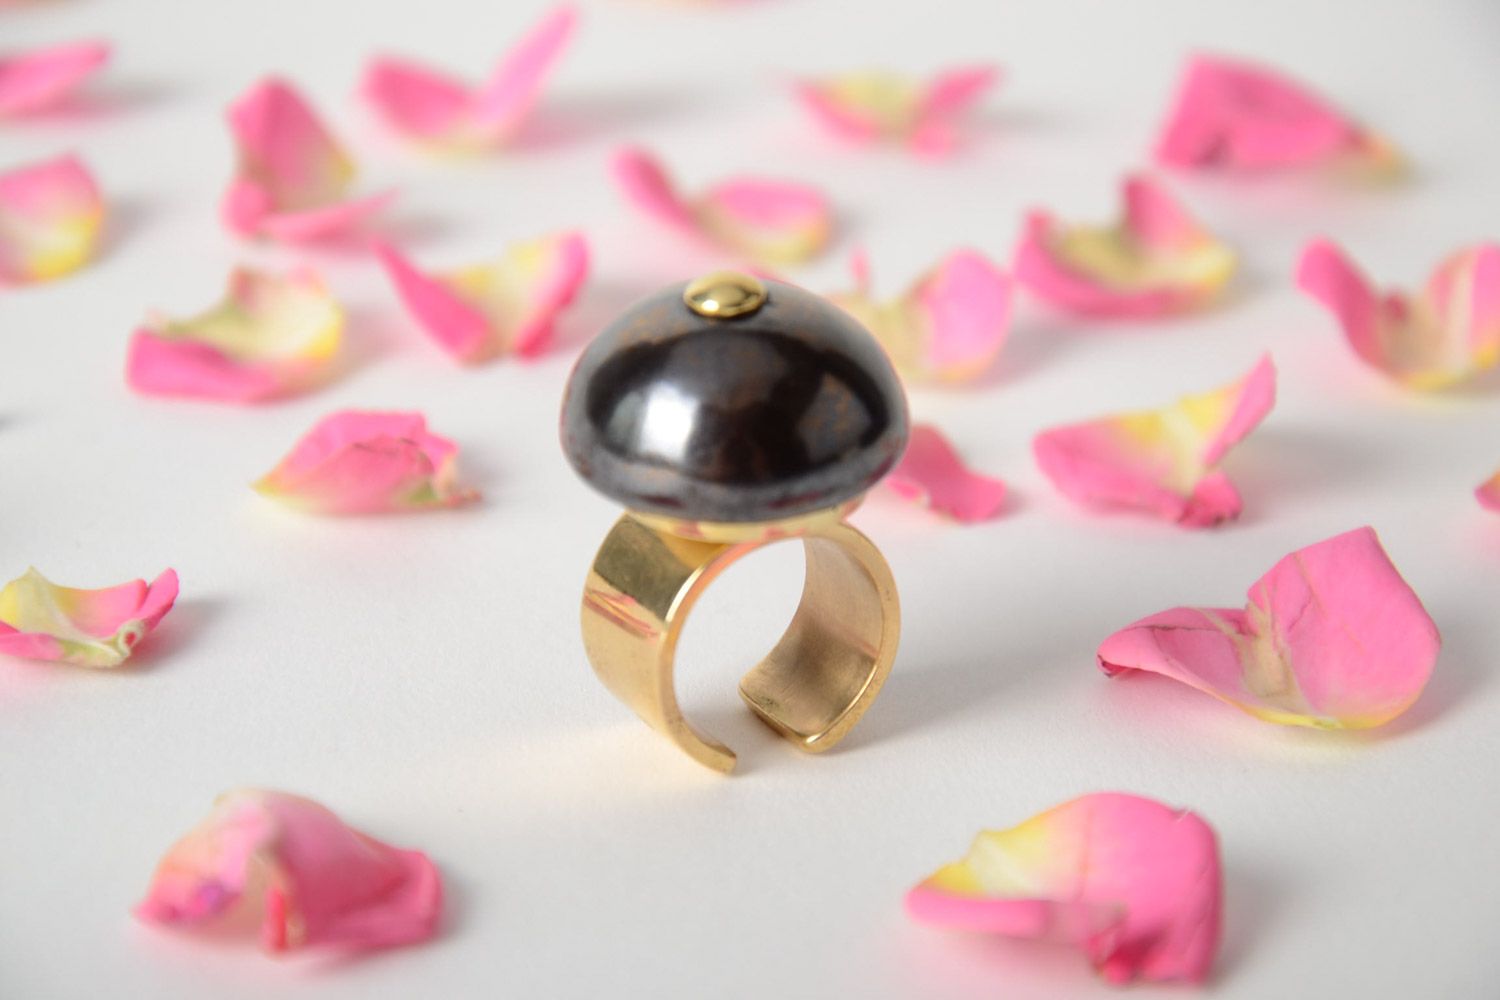 Handmade volume adjustable metal ring with black porcelain element for women photo 1